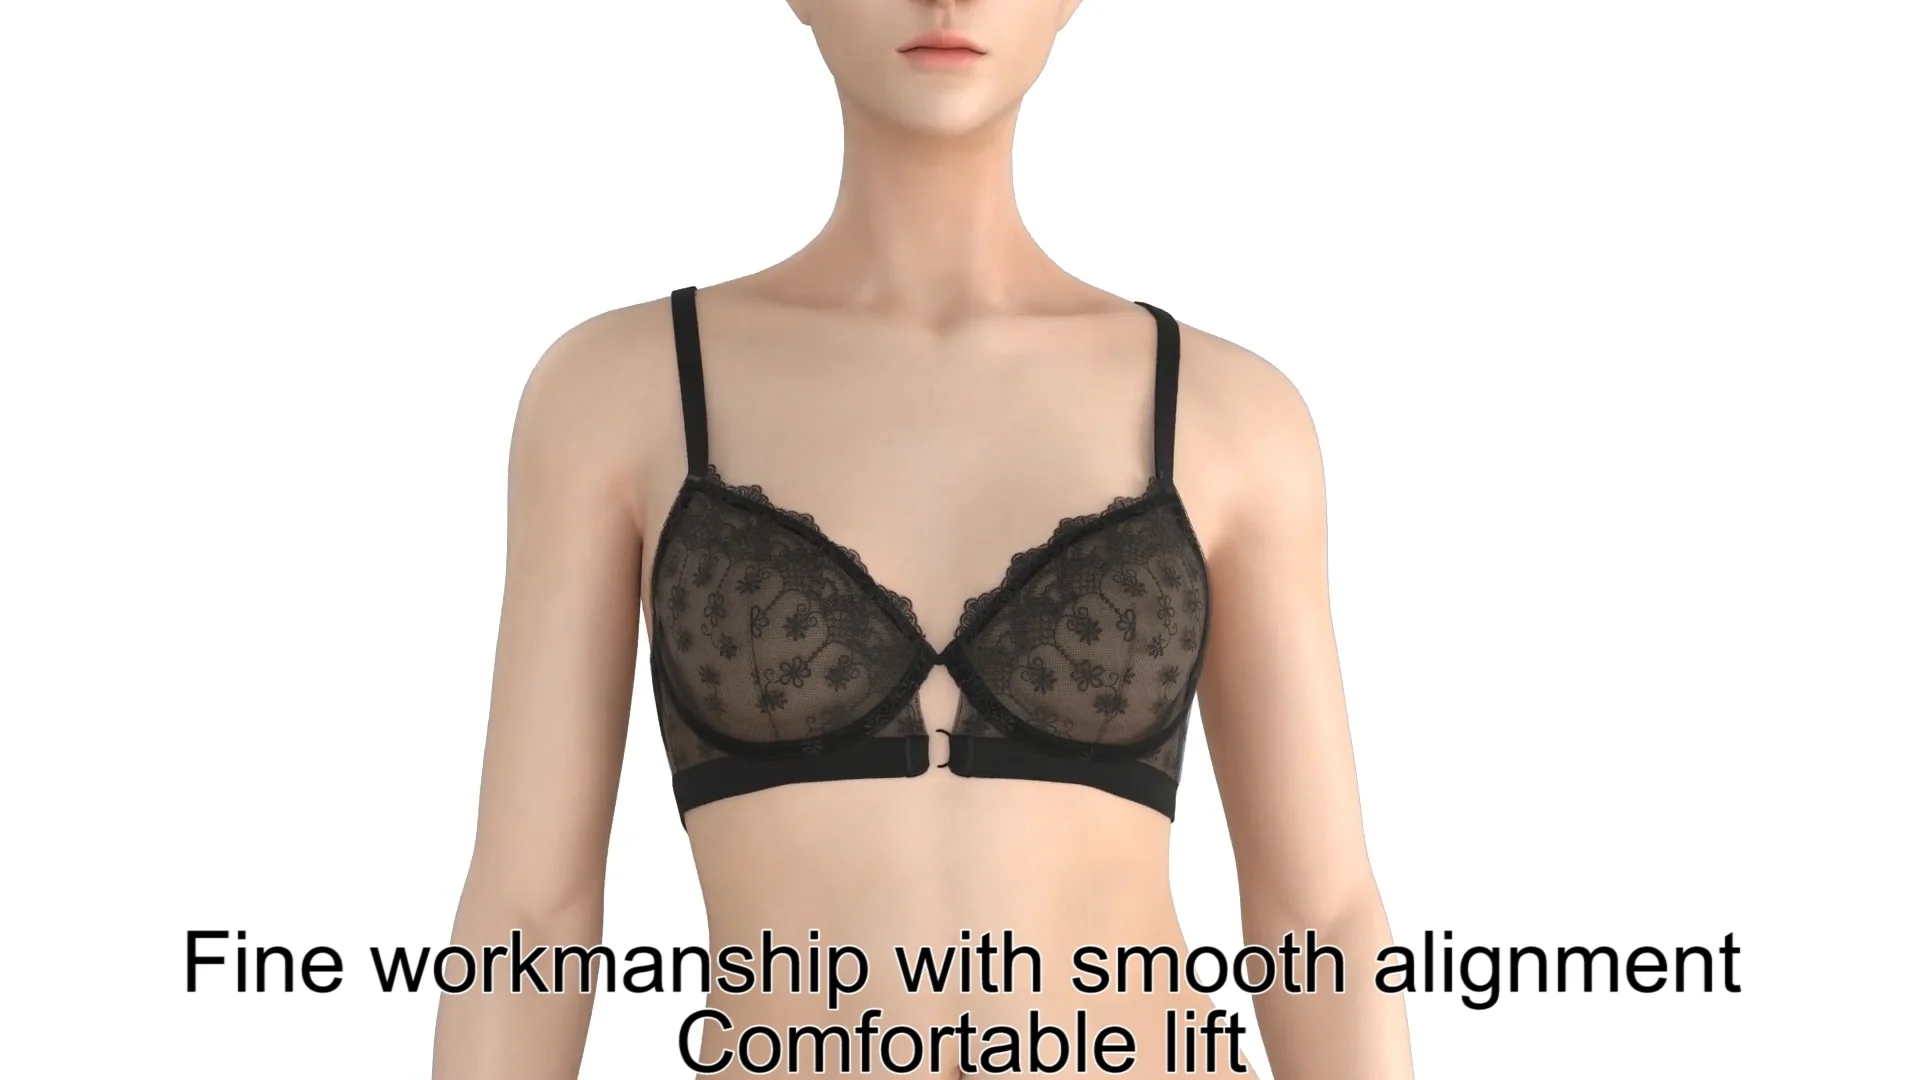 Aligament Bra For Women Lingerie Lace Underwire Comfortable Bra Size 75B 